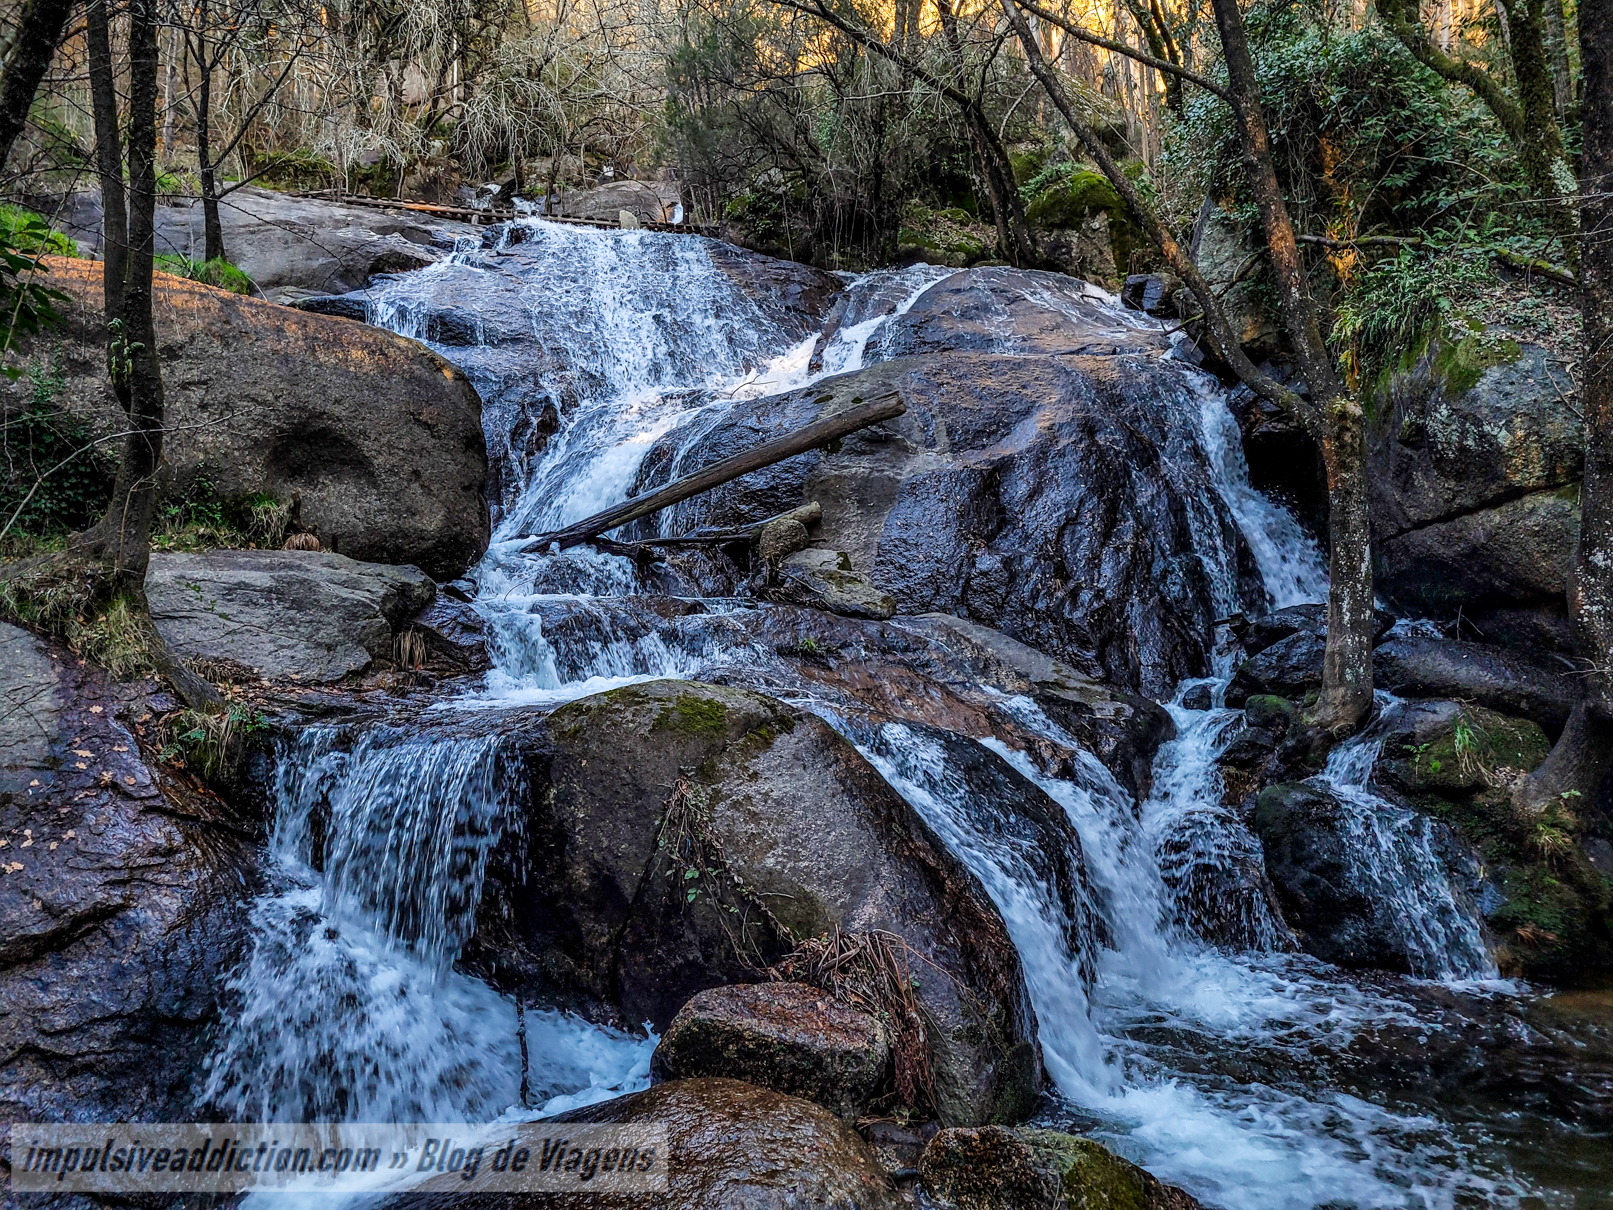 Fervença Waterfalls in Santo Tirso